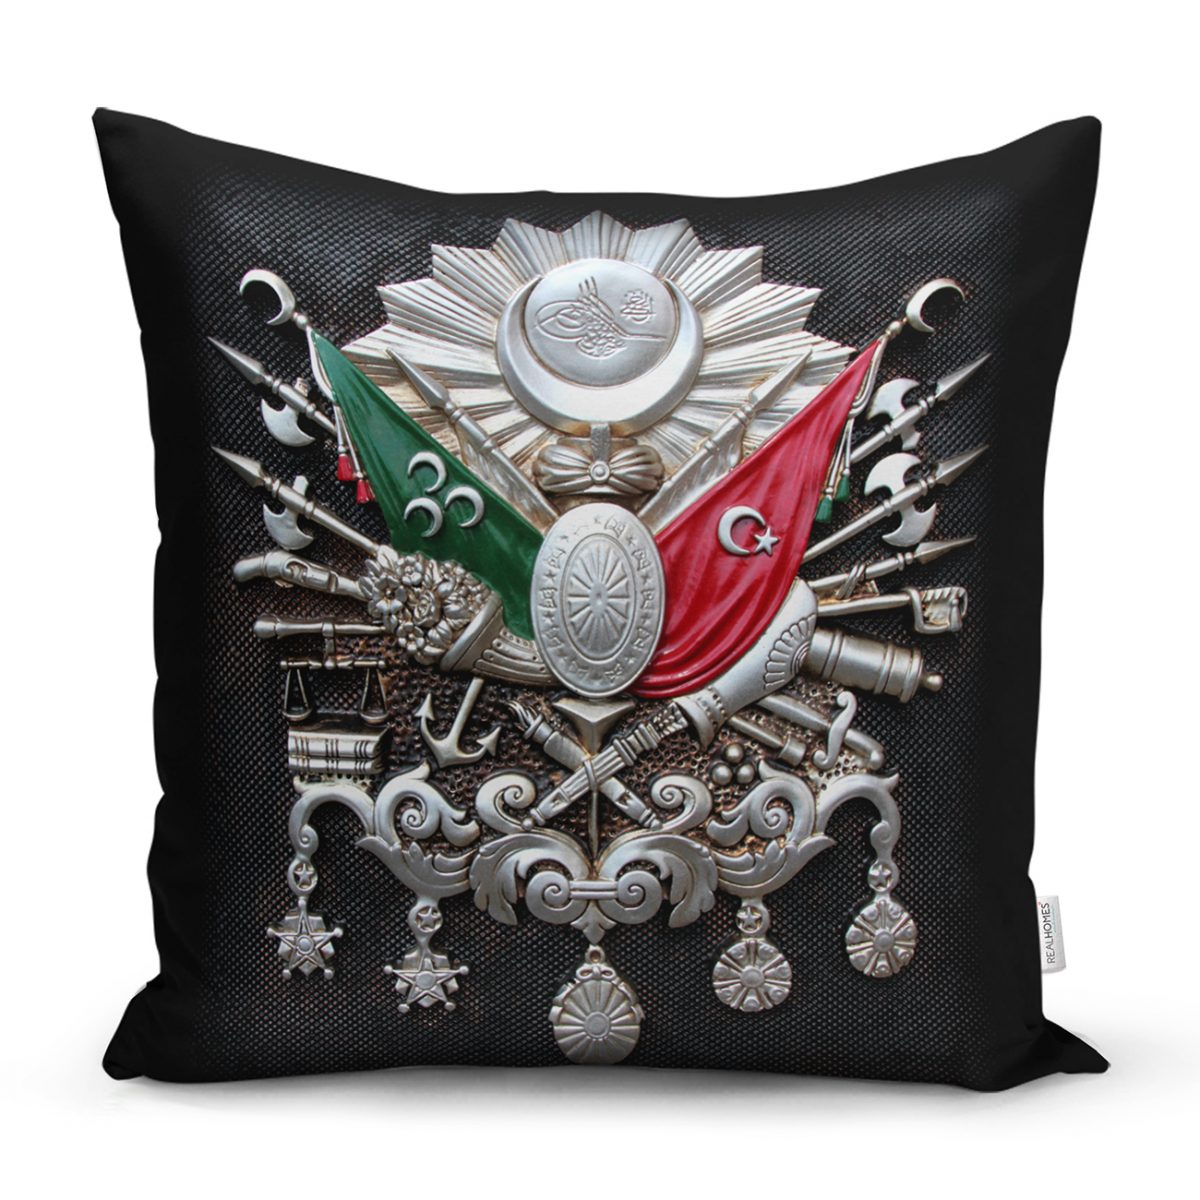 Osmanlı Devlet Arması Dekoratif Kırlent Kılıfı Realhomes